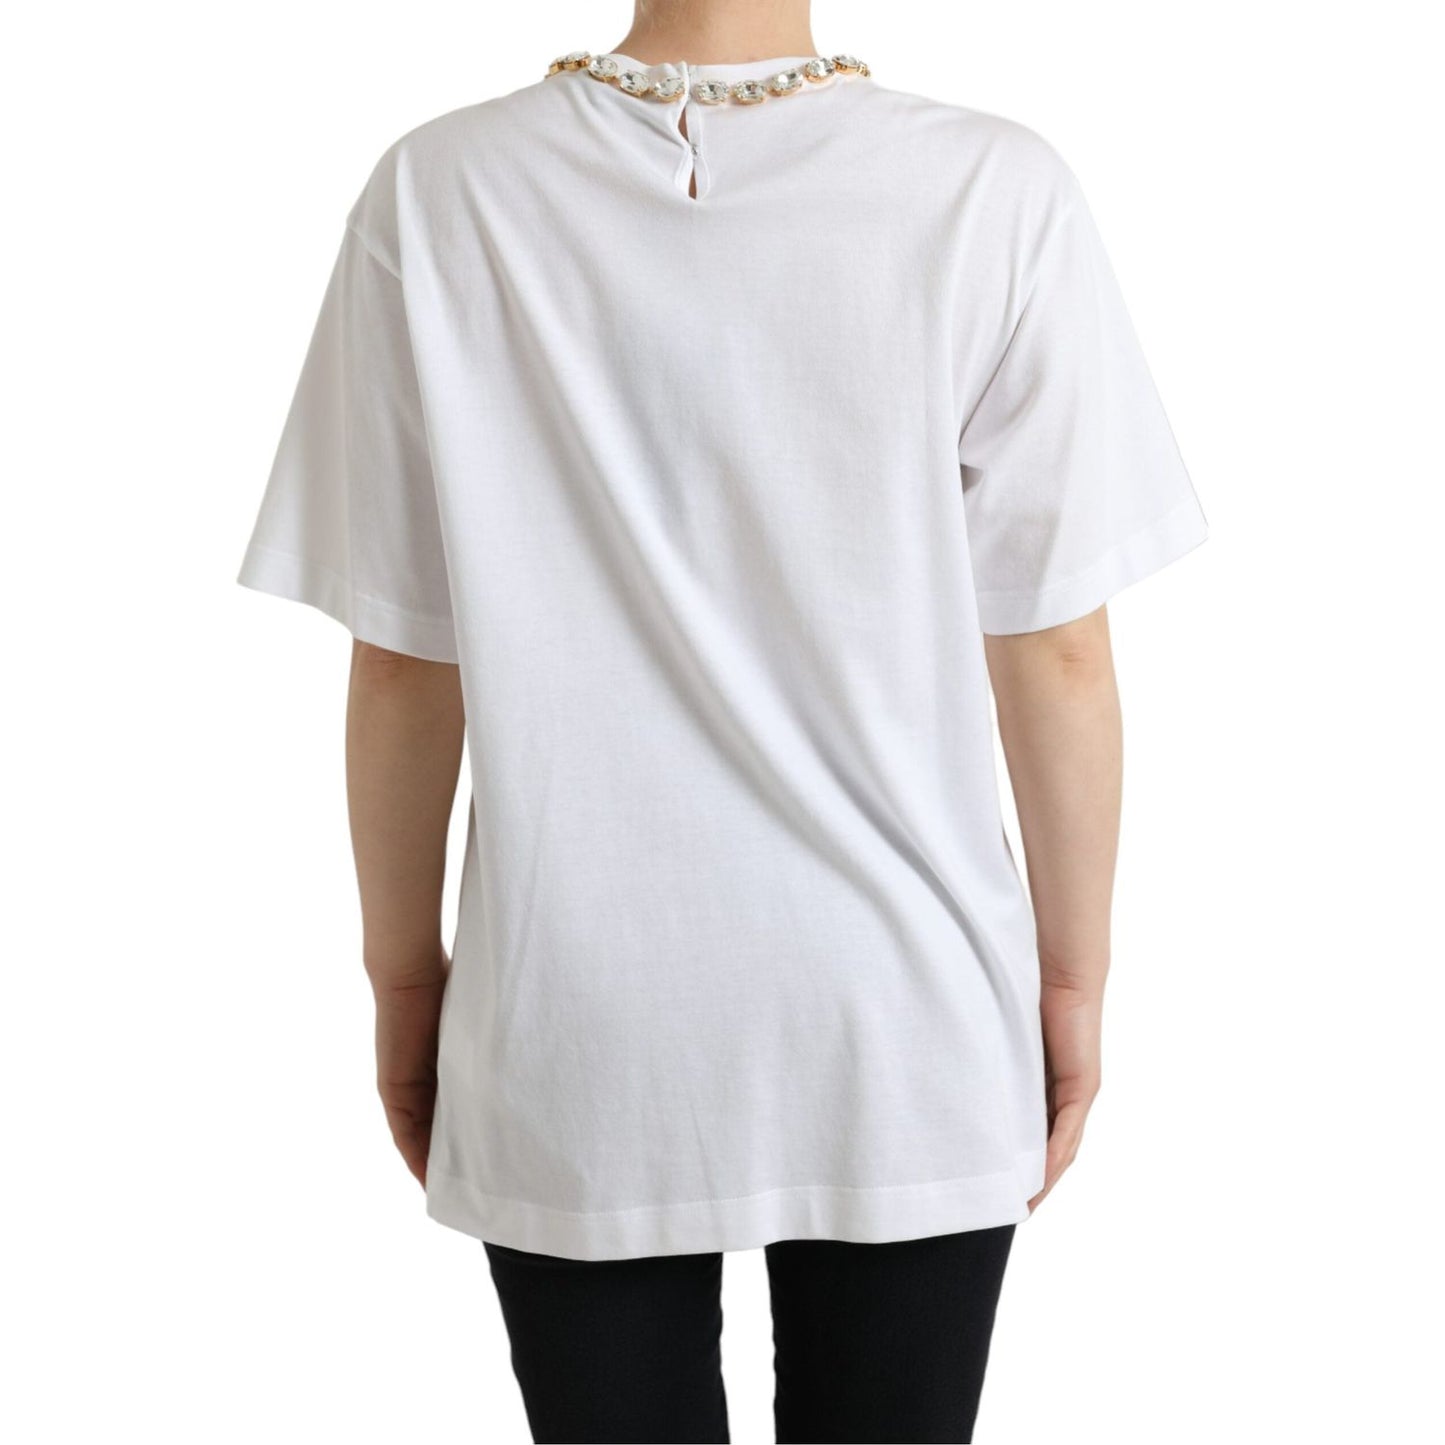 Dolce & Gabbana J.Lo Portrait Crystal Tee – Limited Edition white-crystal-neckline-print-tee-t-shirt